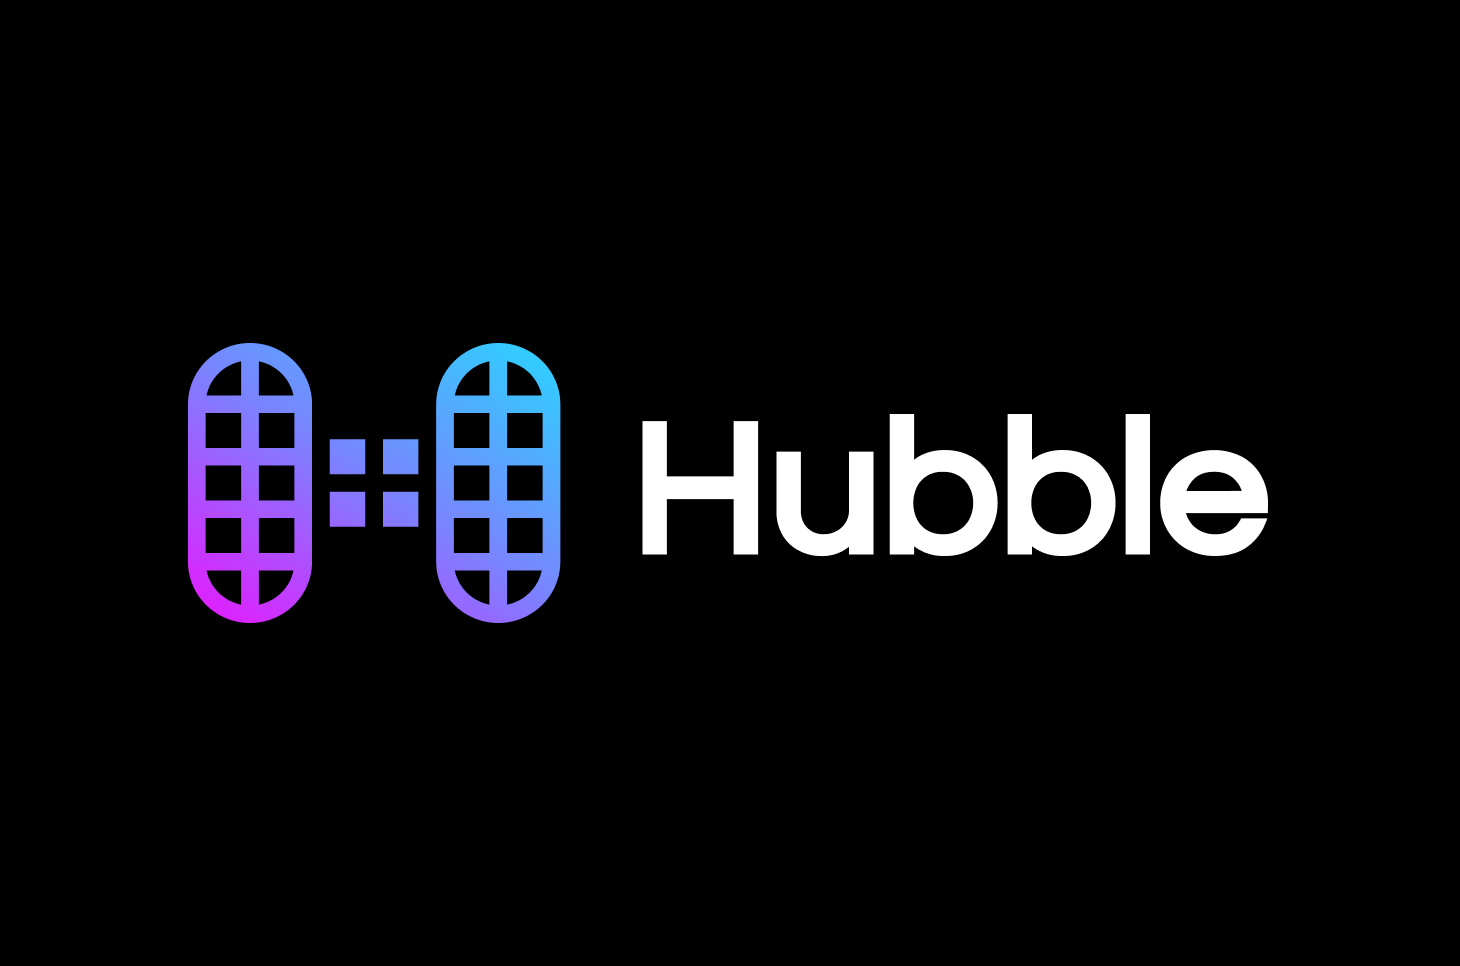 Hubble, Saturday, January 29, 2022, Press release picture